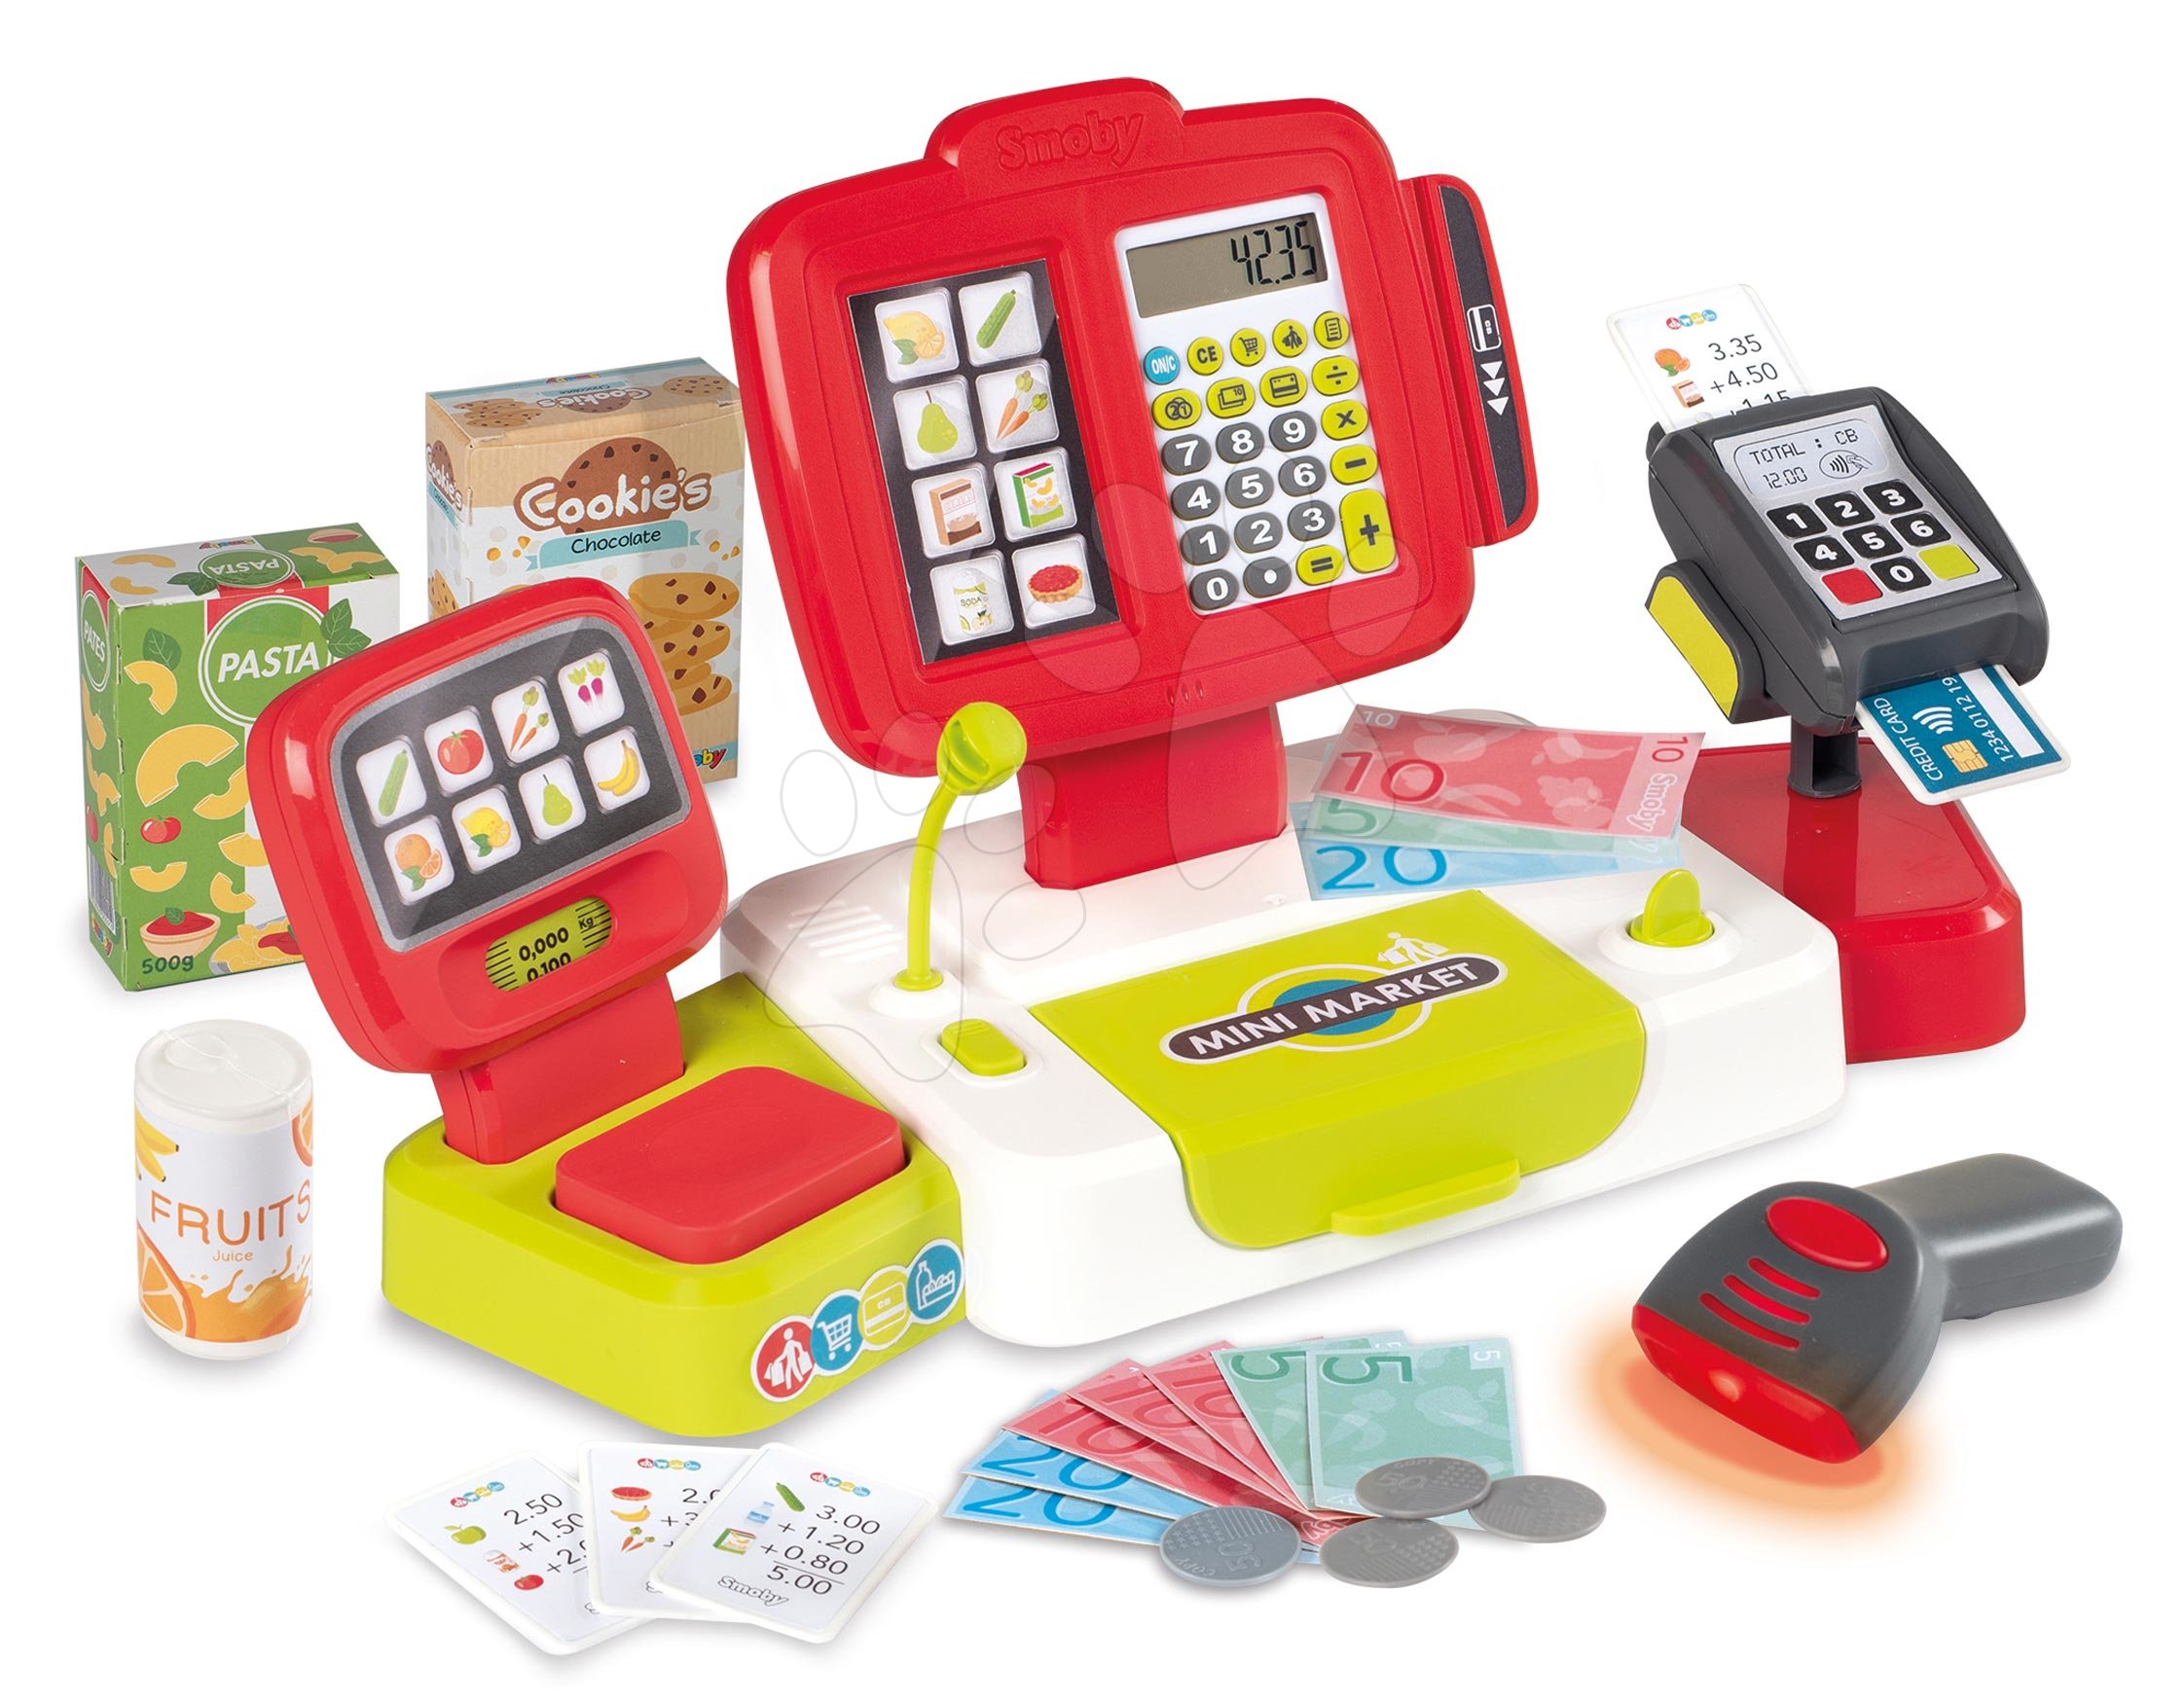 Pokladňa elektronická s kalkulačkou Large cash Register Smoby červená s váhou terminálom a čítačkou kódov s 30 doplnkami